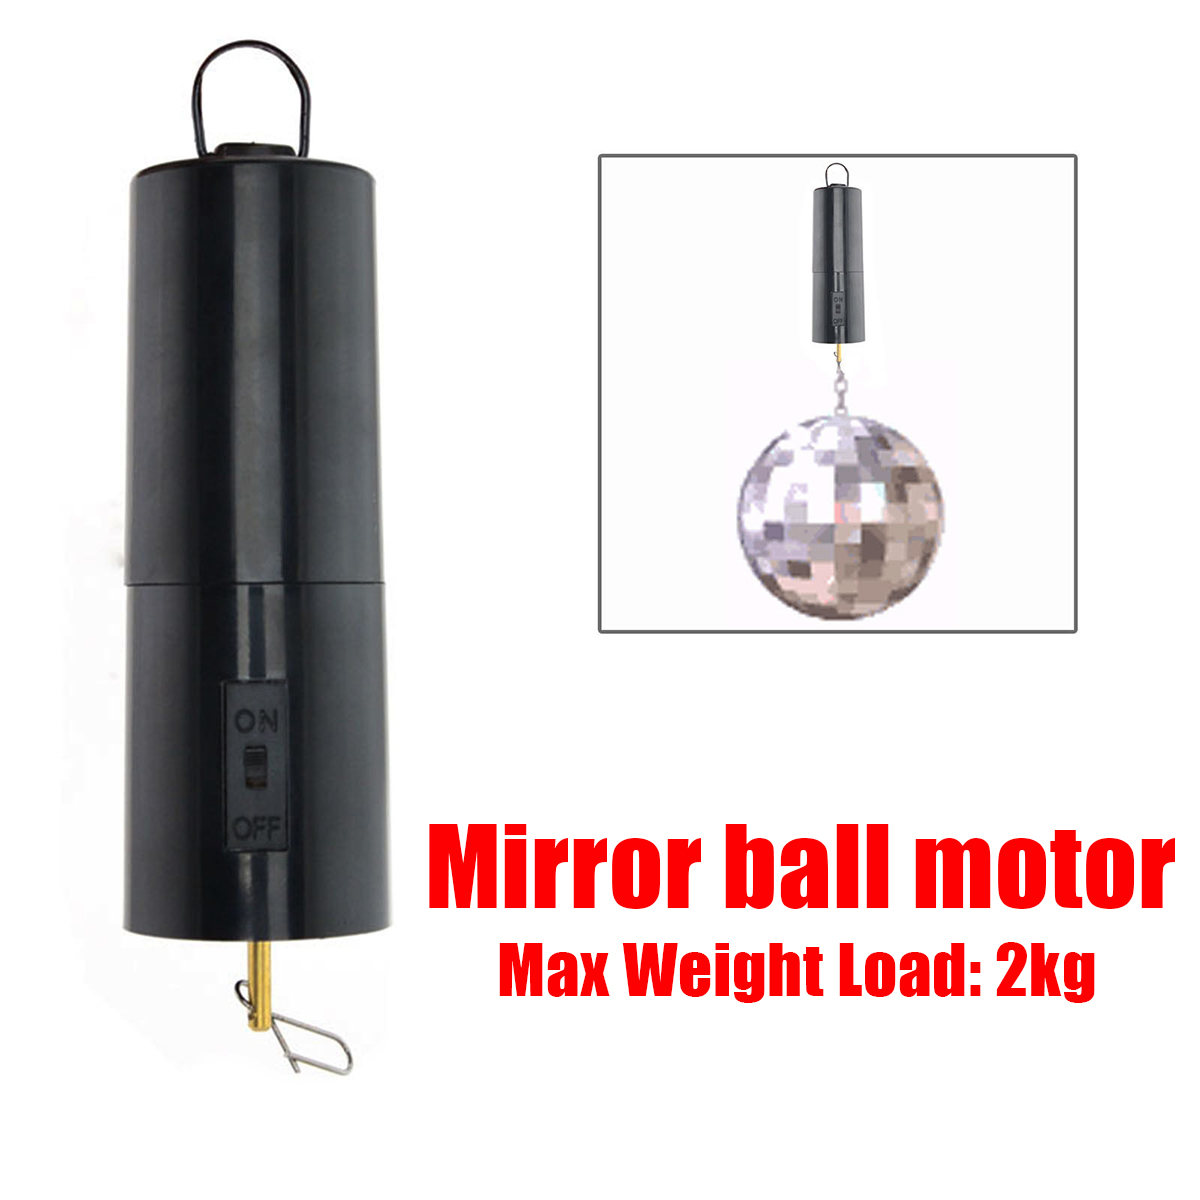 Mirror ball motor